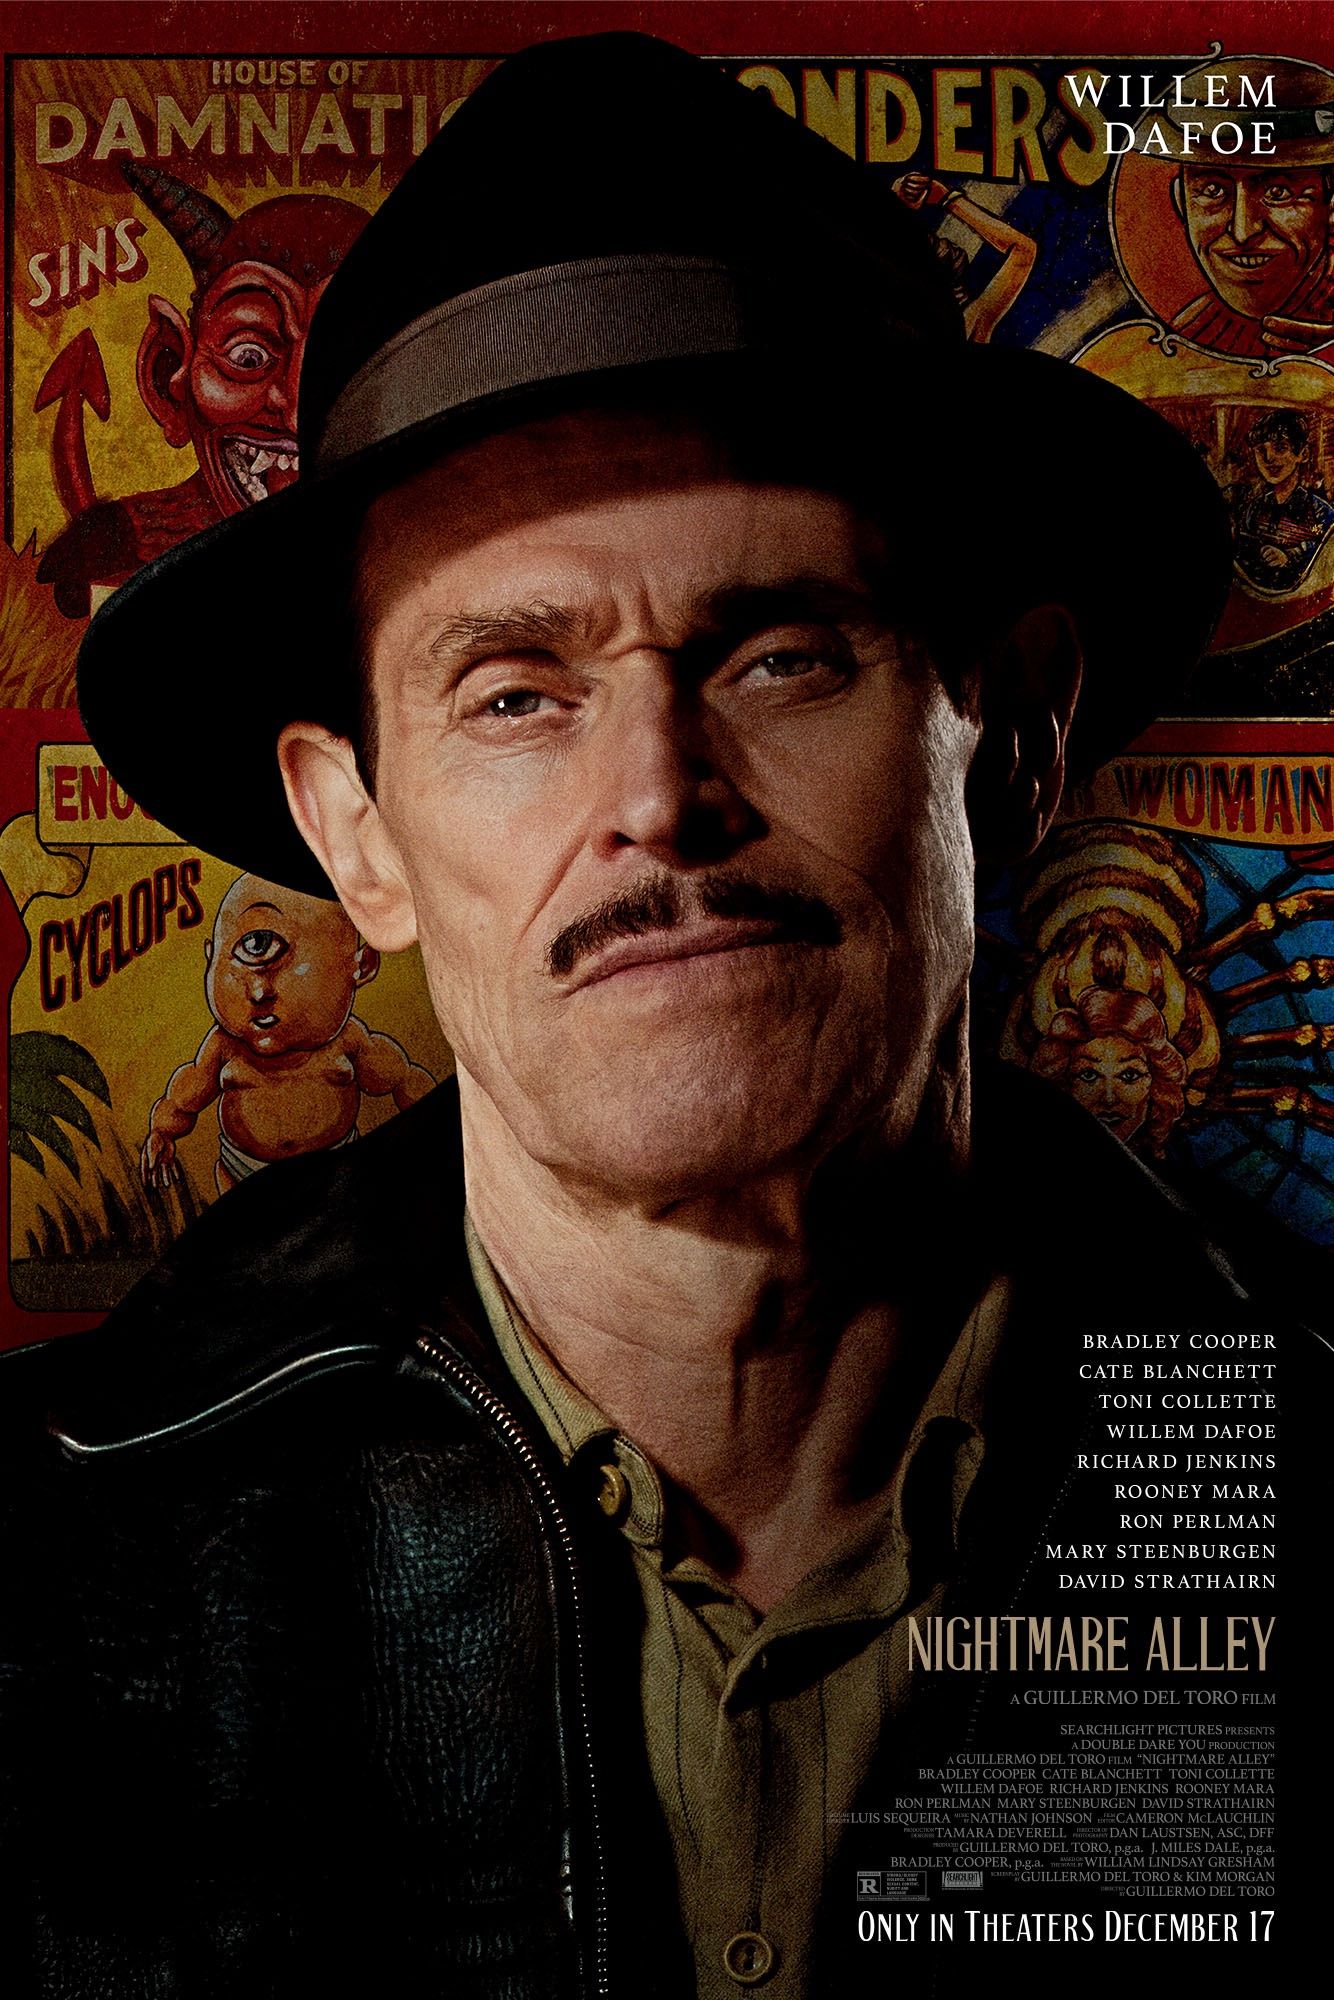 Willem Dafoe Nightmare Alley character poster